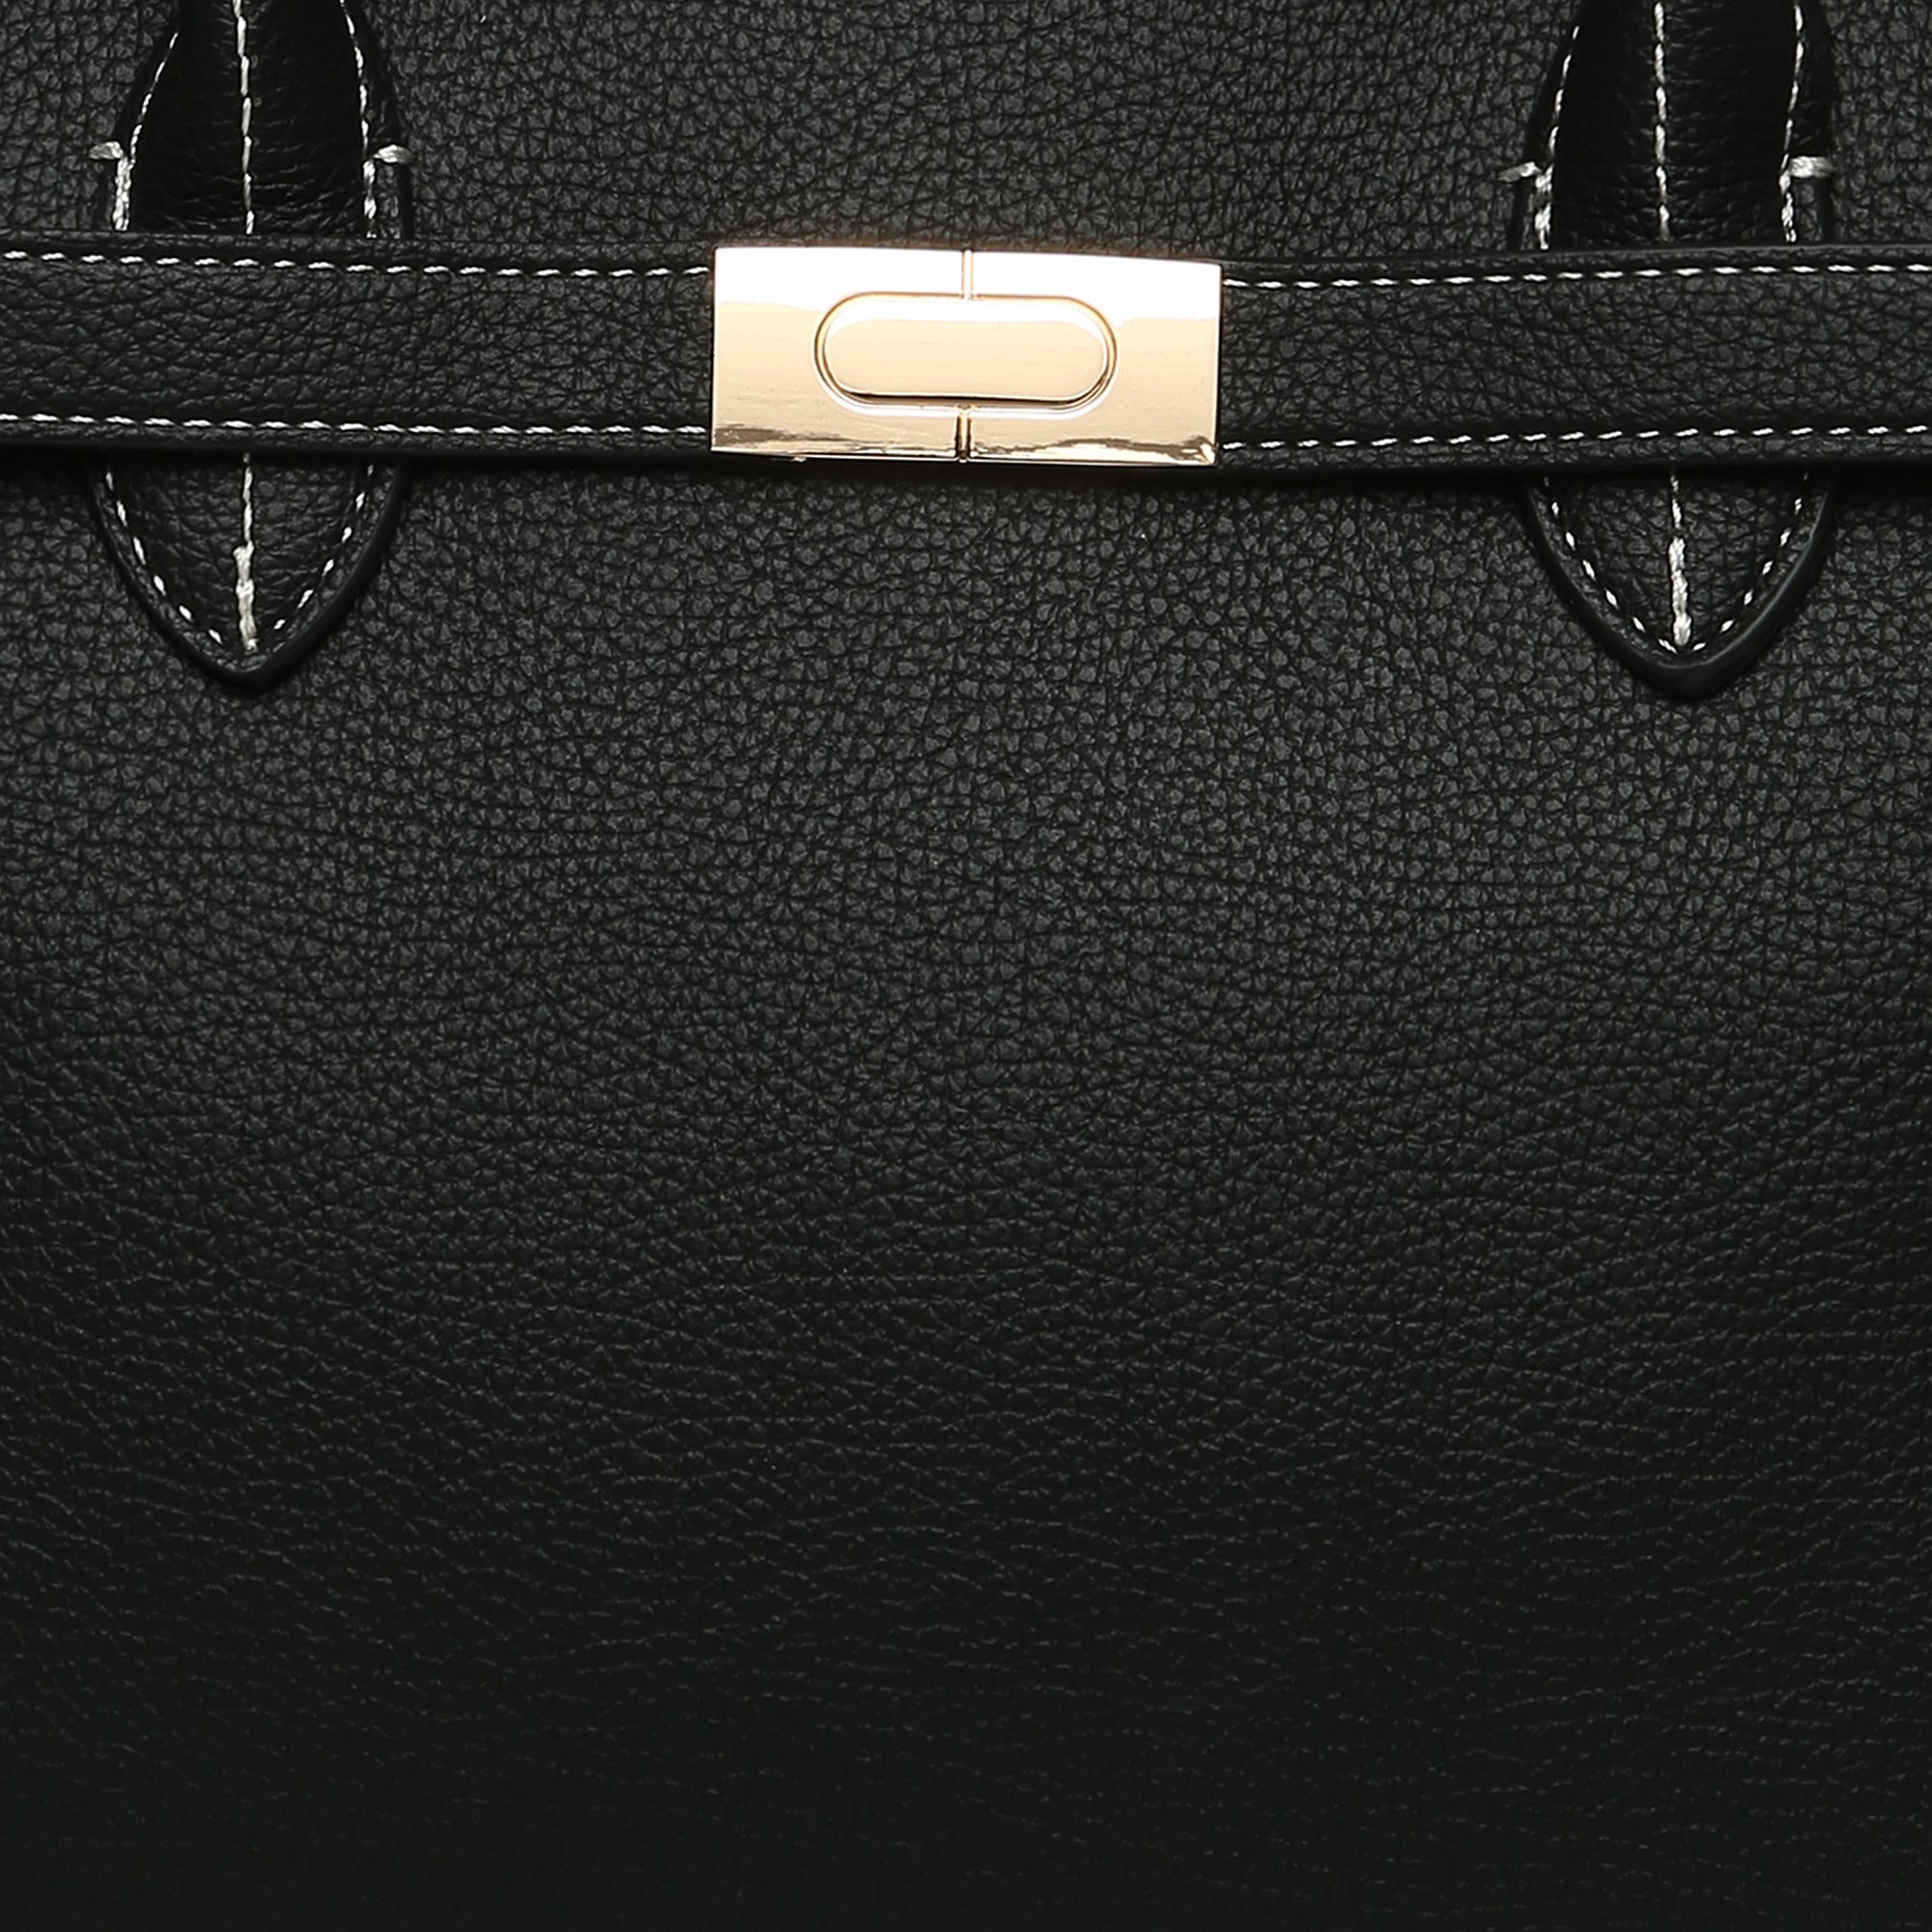 Accessorize London Women'S Faux Leather Black Contrast Stitch Handheld Tote Bag